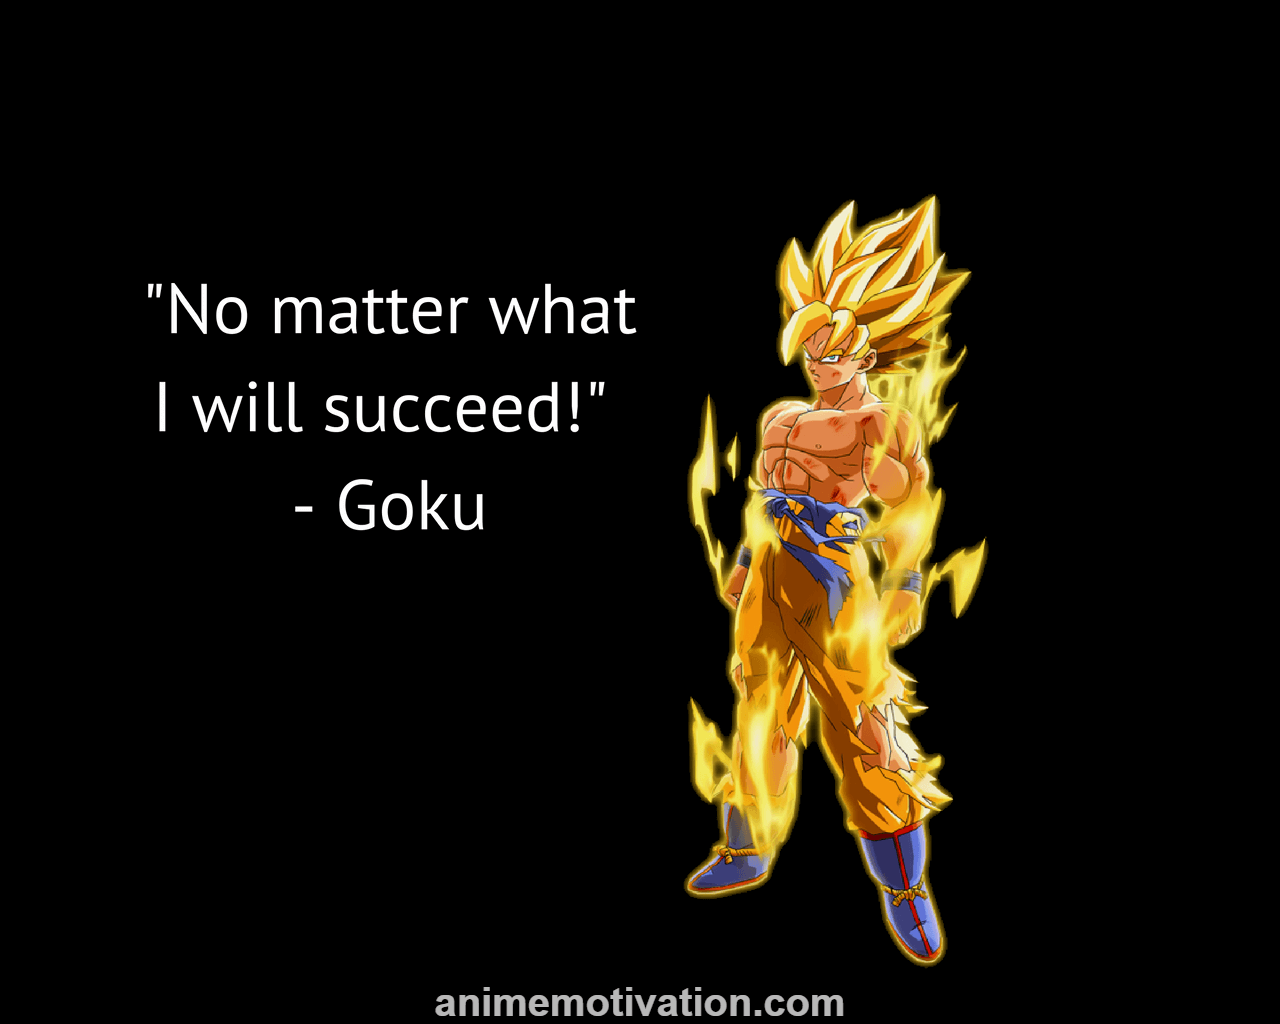 Inspirational Anime Wallpaper You Need To Download. Goku quotes, Anime quotes, Anime wallpaper